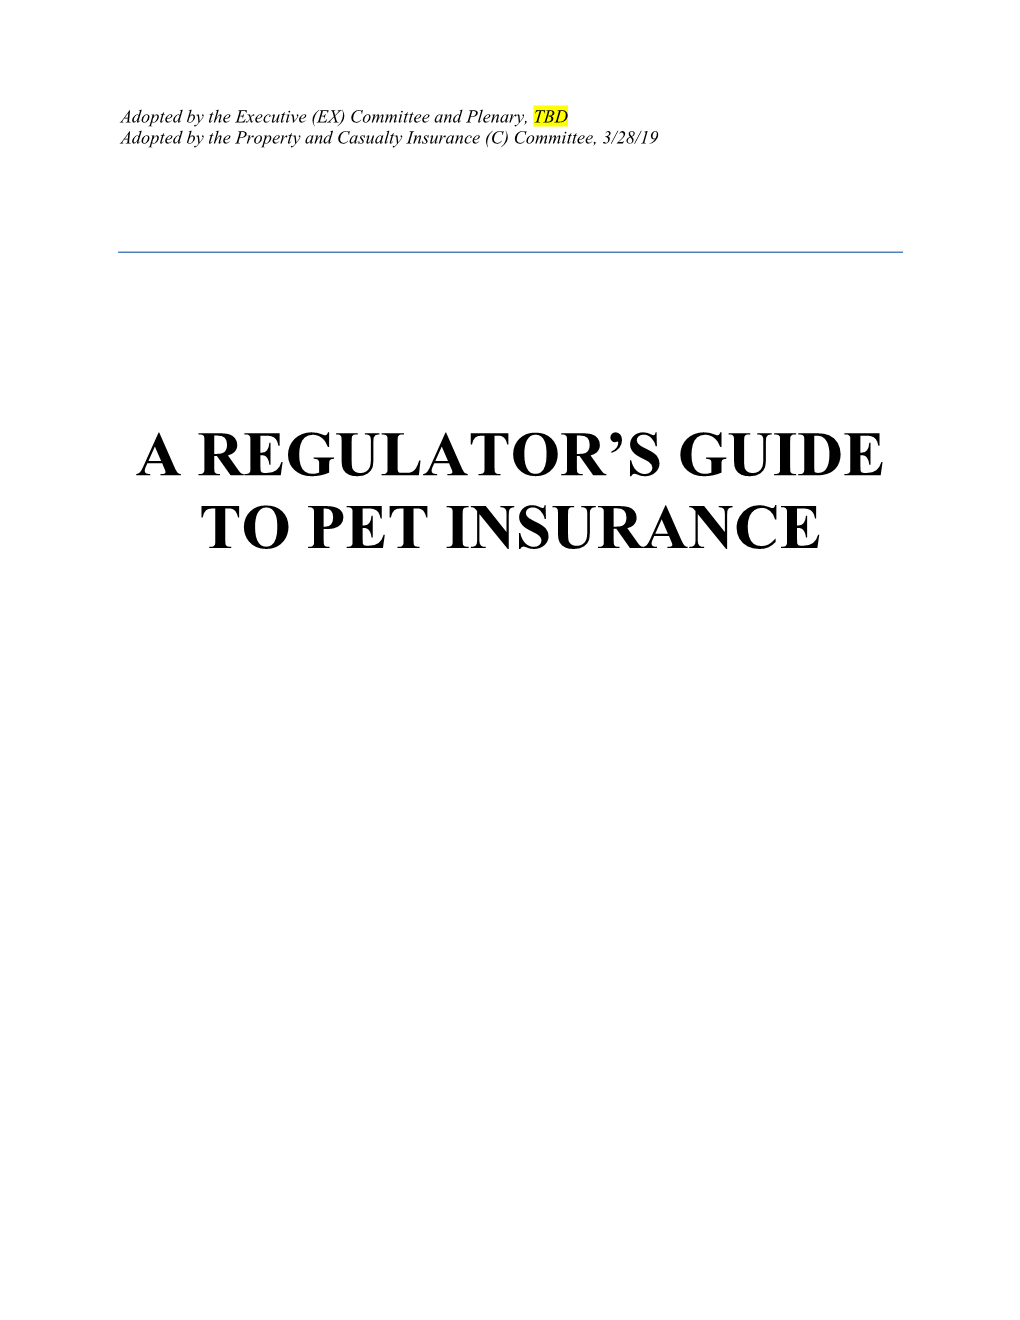 A Regulator's Guide to Pet Insurance